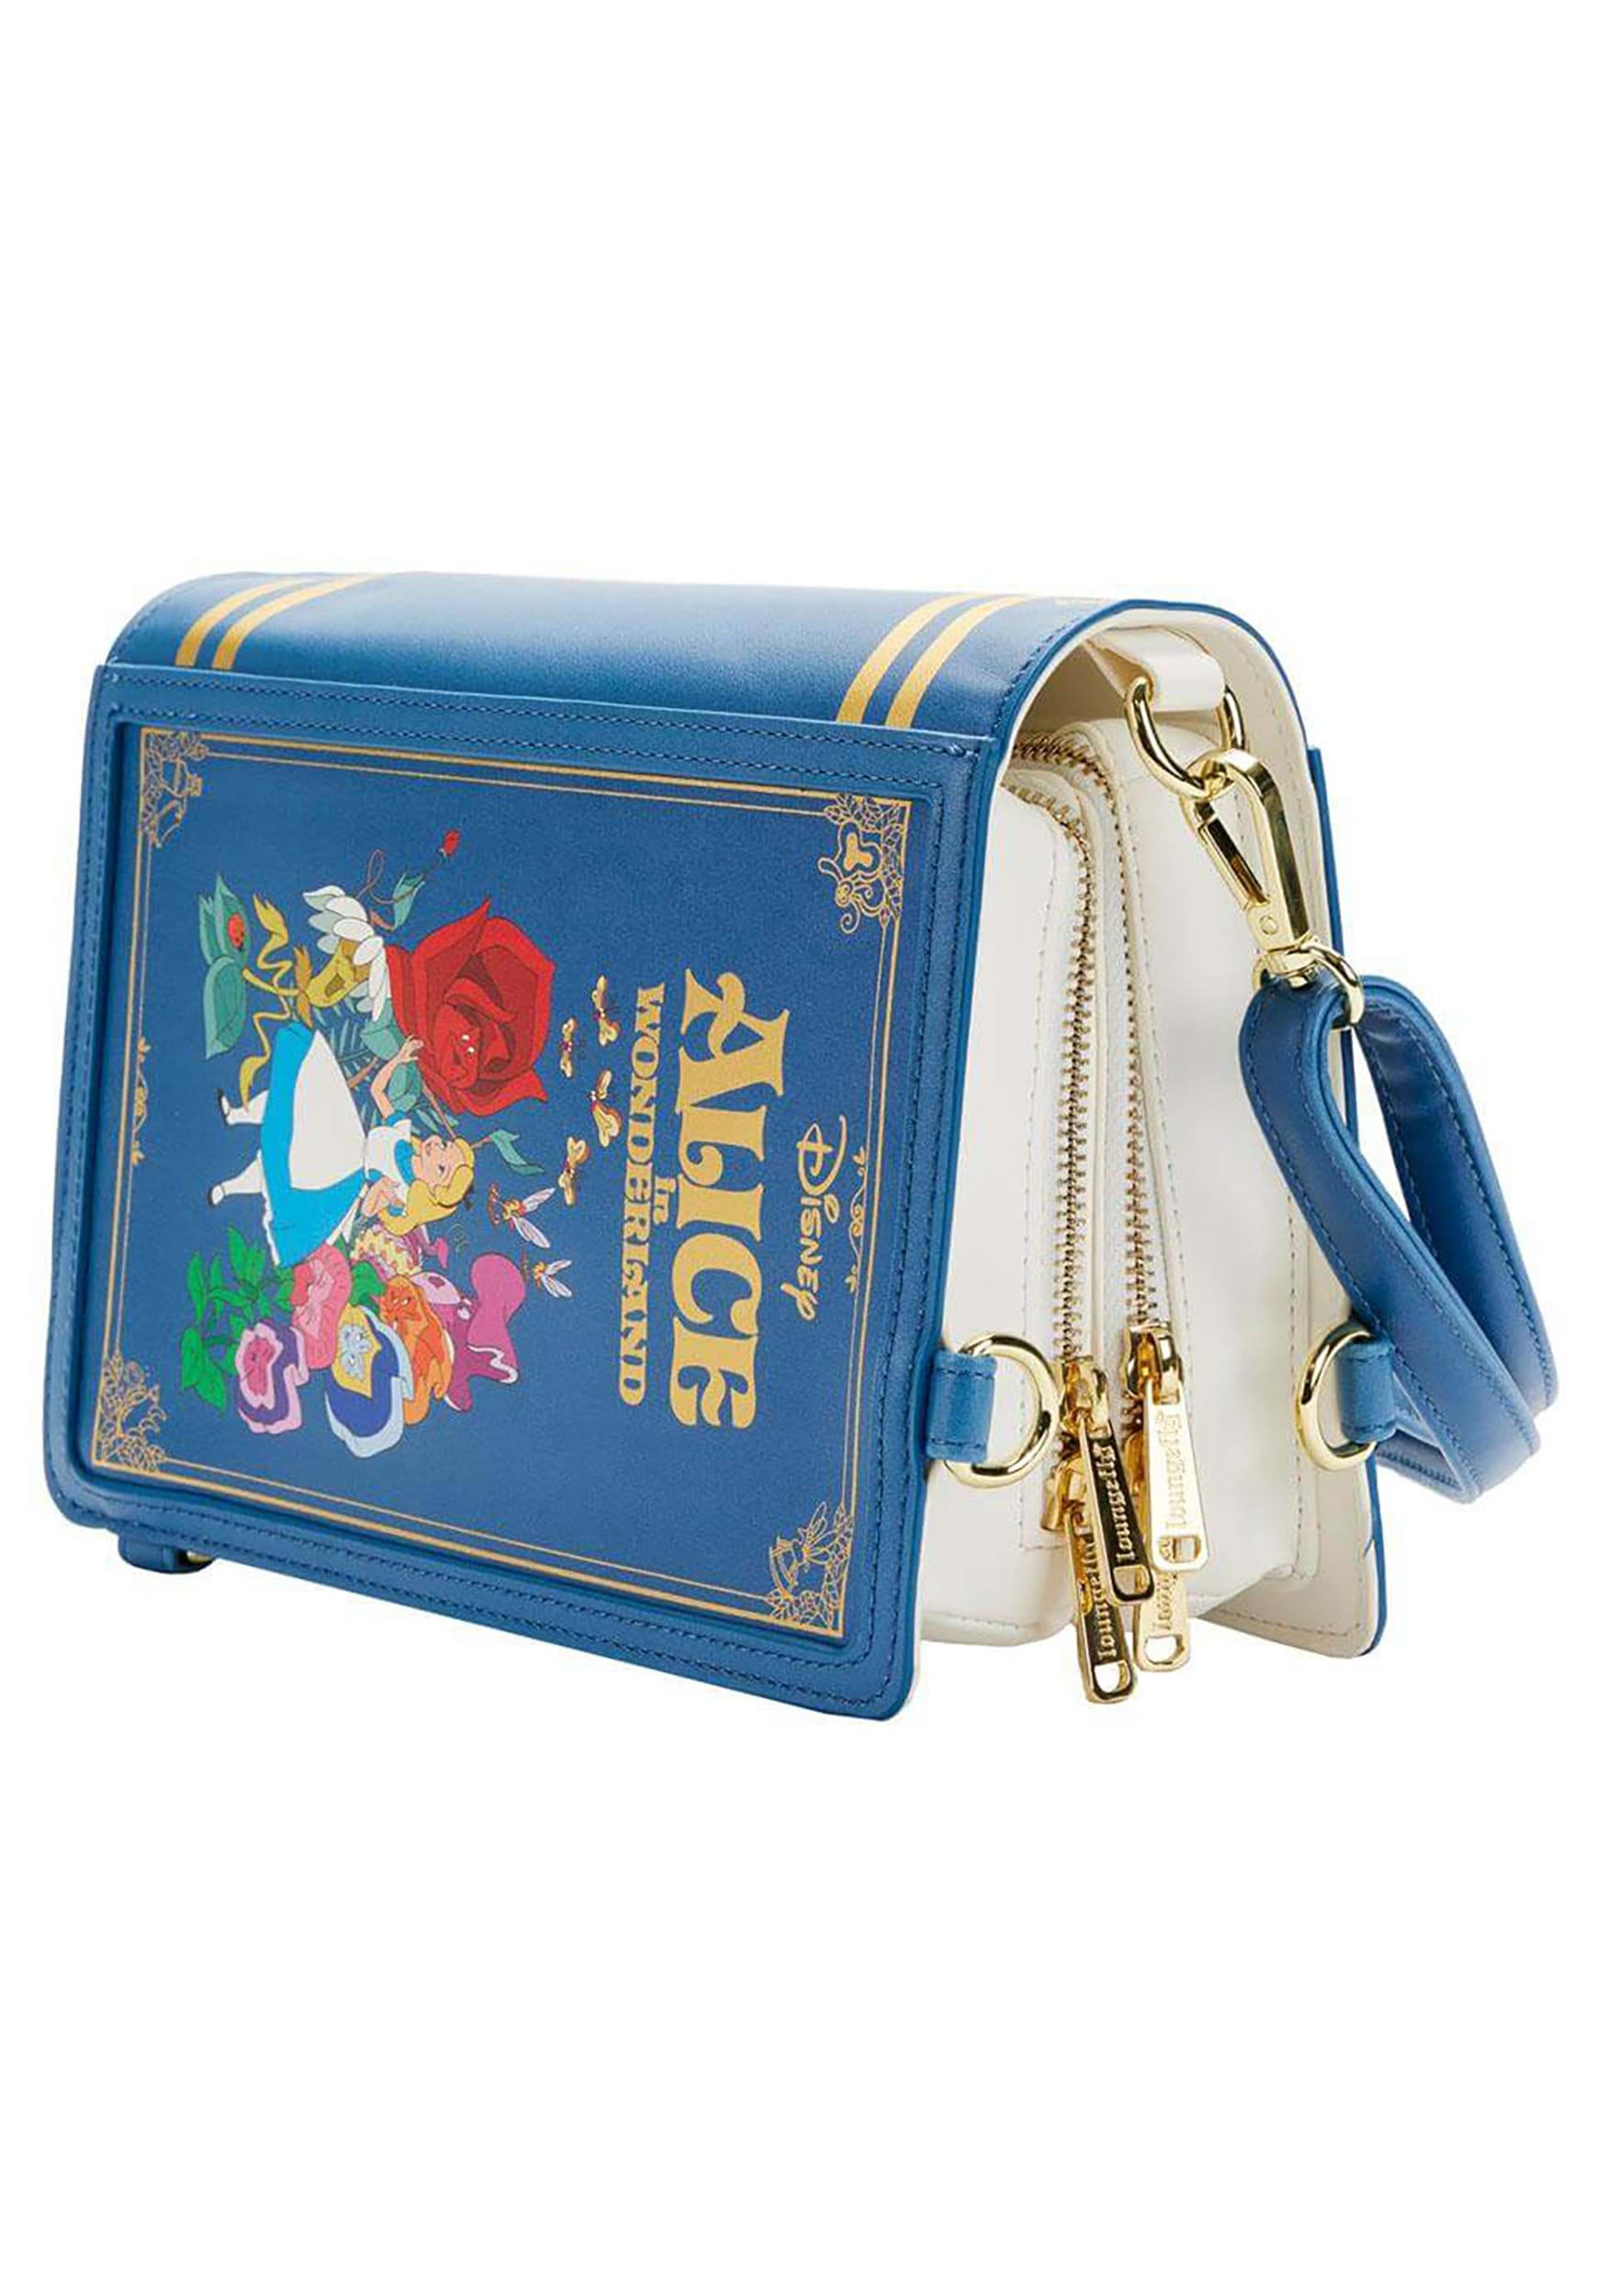 Disney Loungefly Crossbody Bag - Alice in Wonderland Ace of Spades